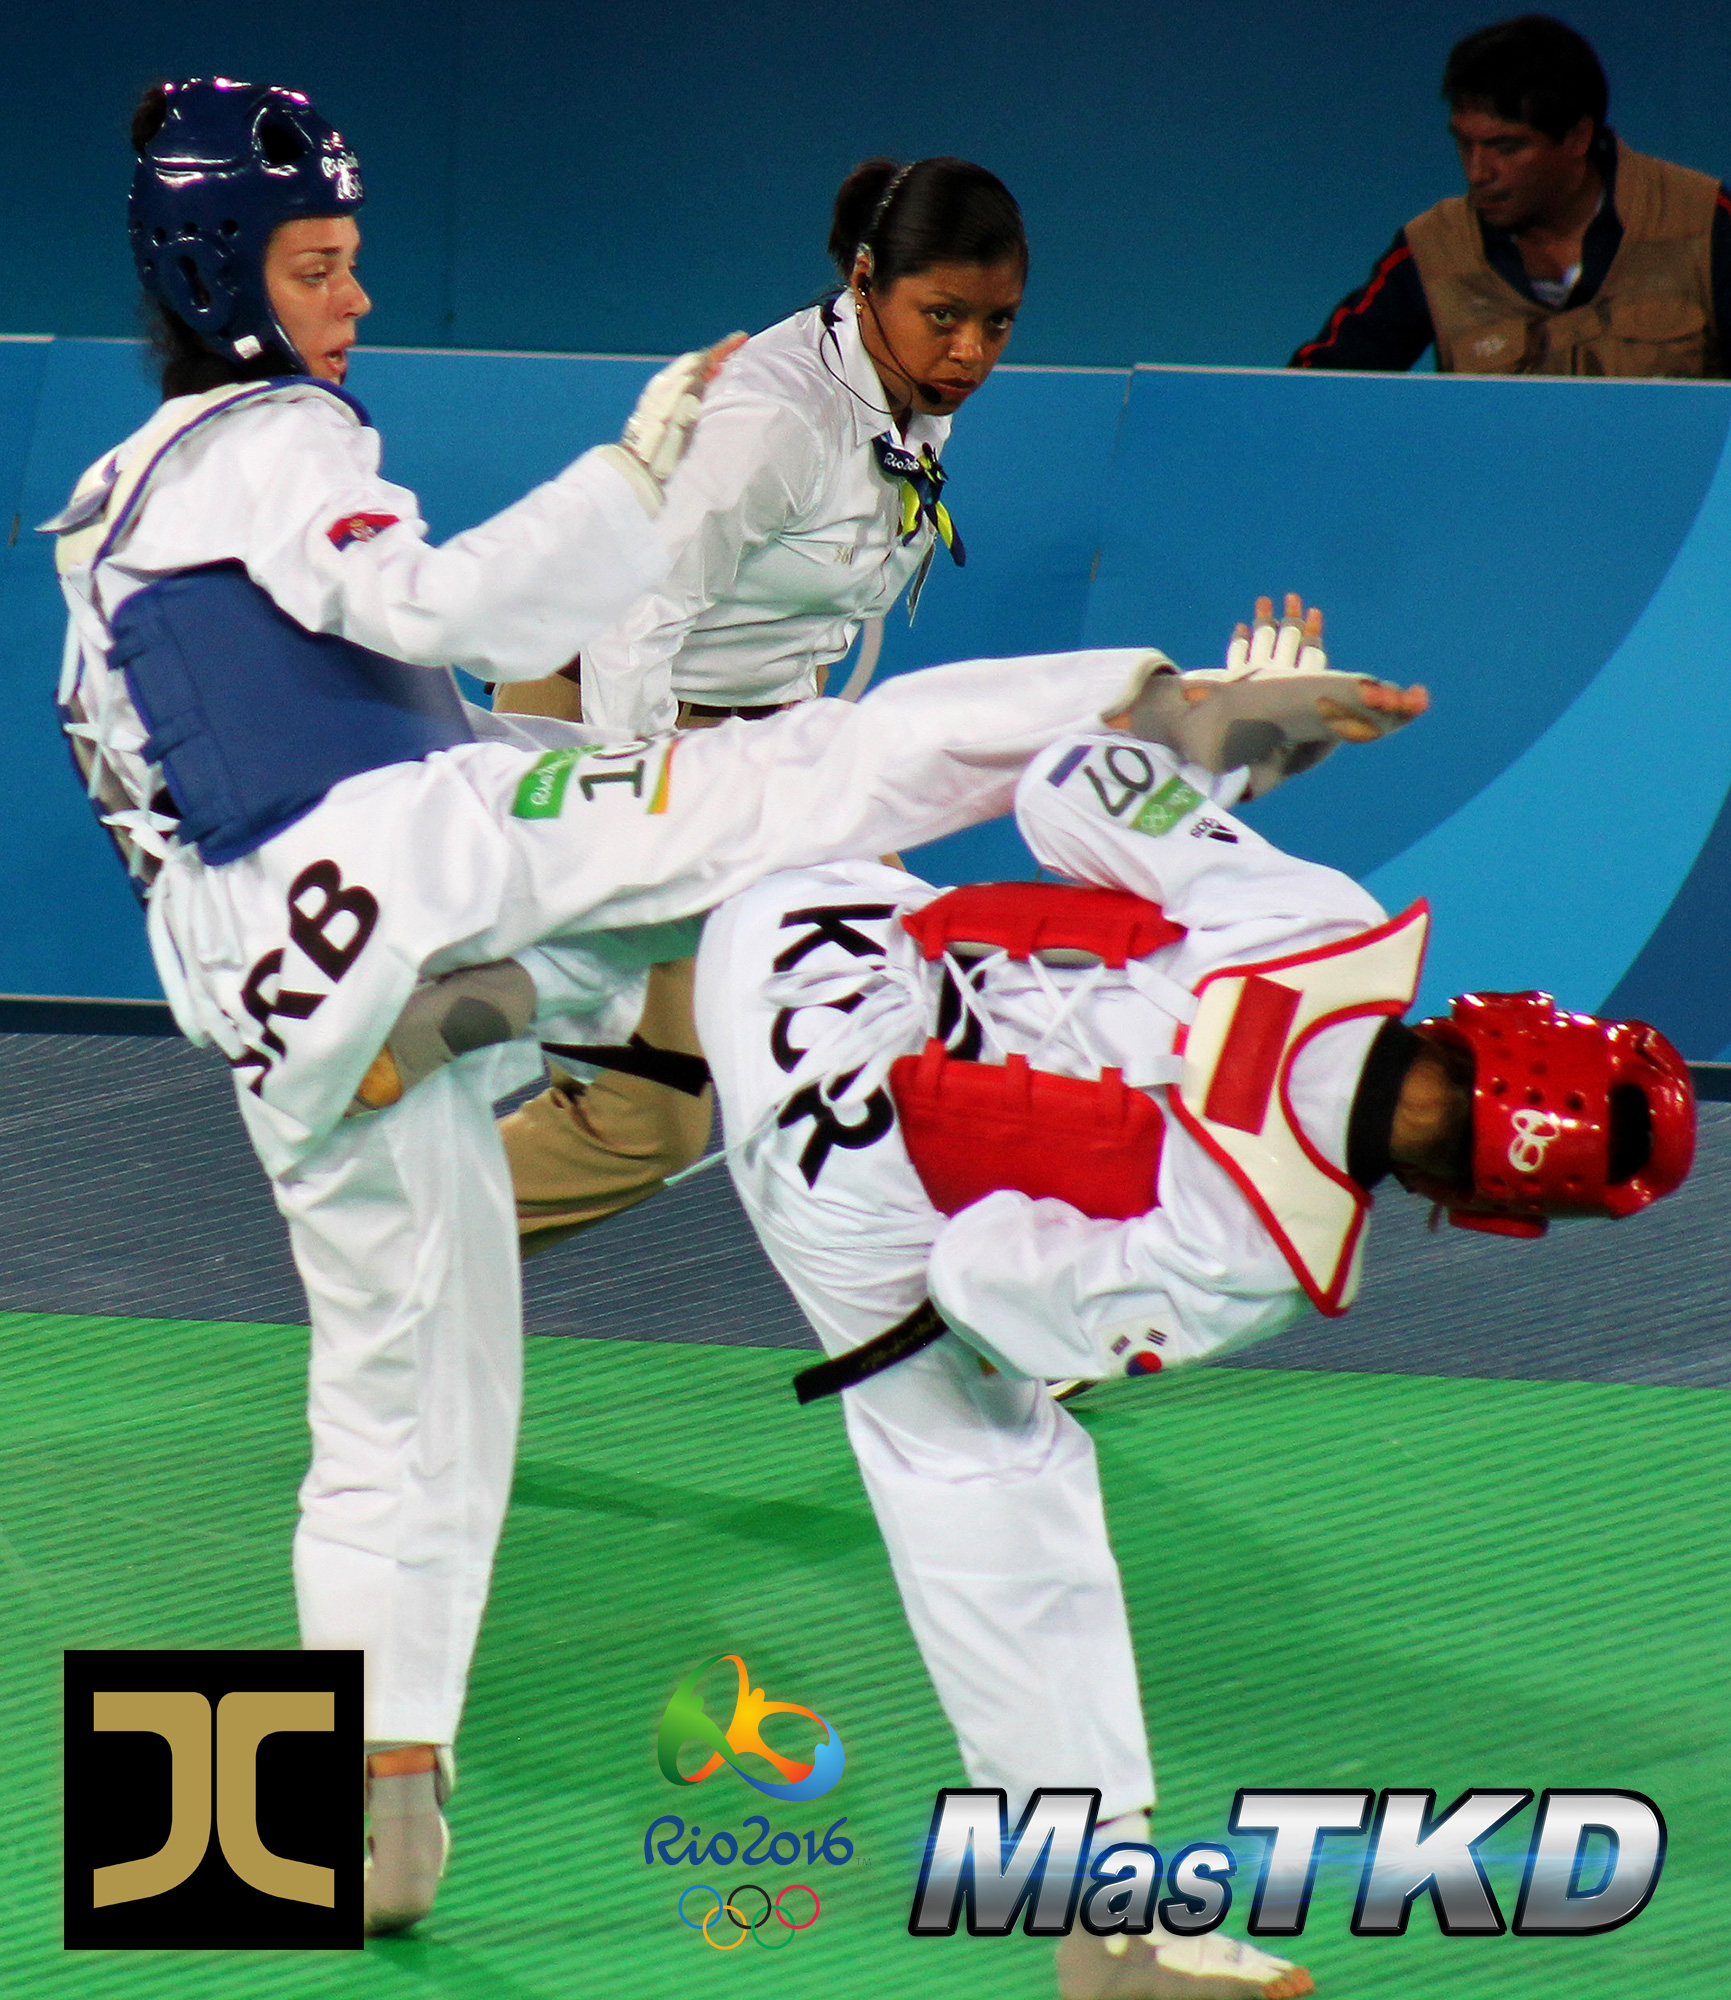 20160817_Taekwondo_JC_masTKD_Rio2016_05